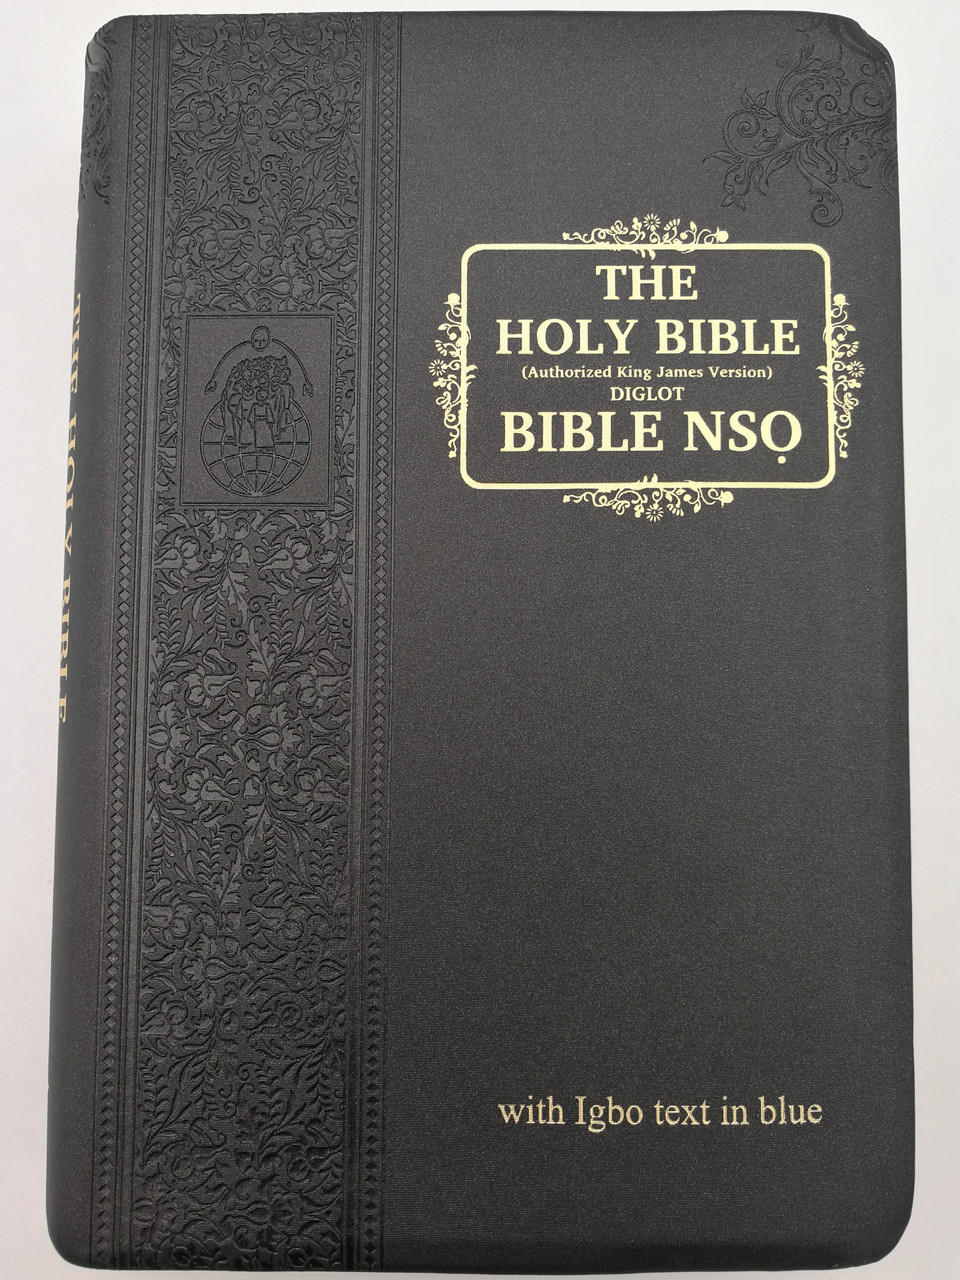 KJV/Bible Nso I/L Black - Bible Society Of Nigeria